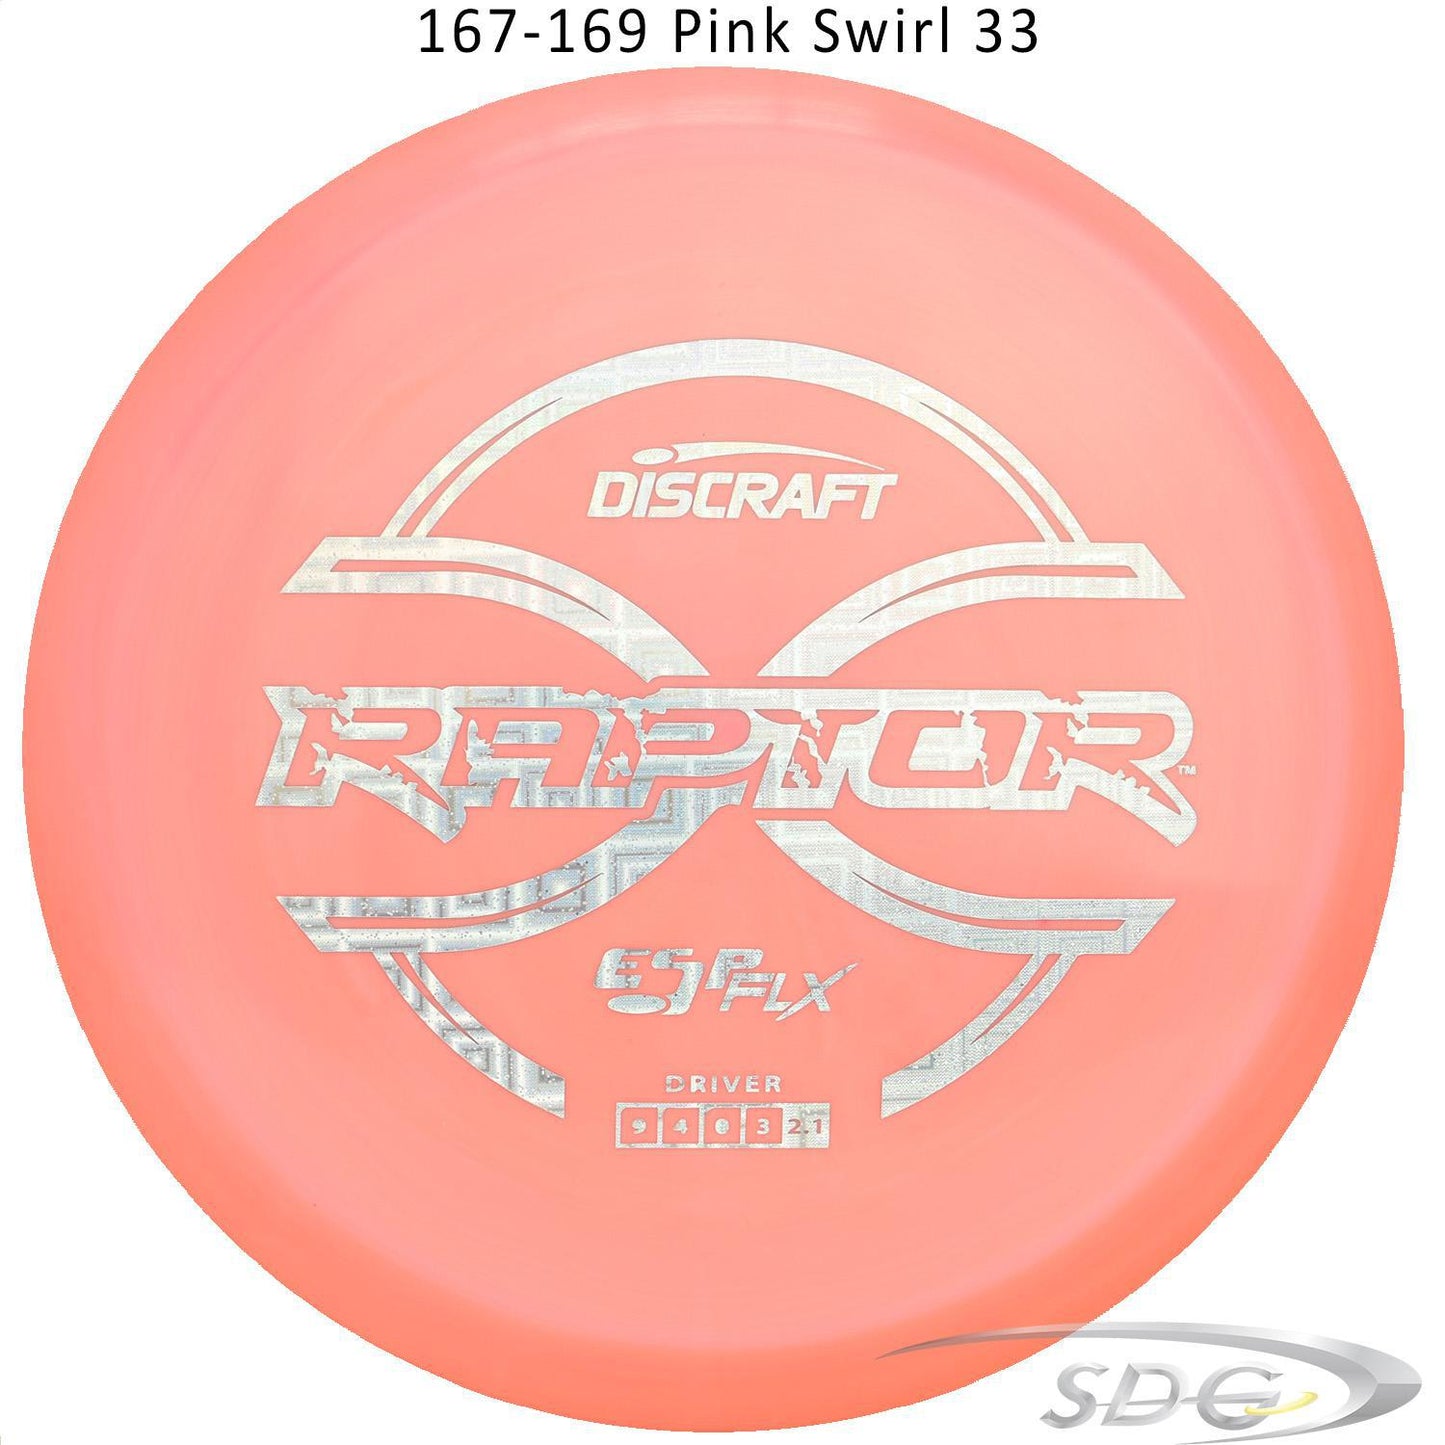 discraft-esp-flx-raptor-disc-golf-distance-driver 167-169 Pink Swirl 33 